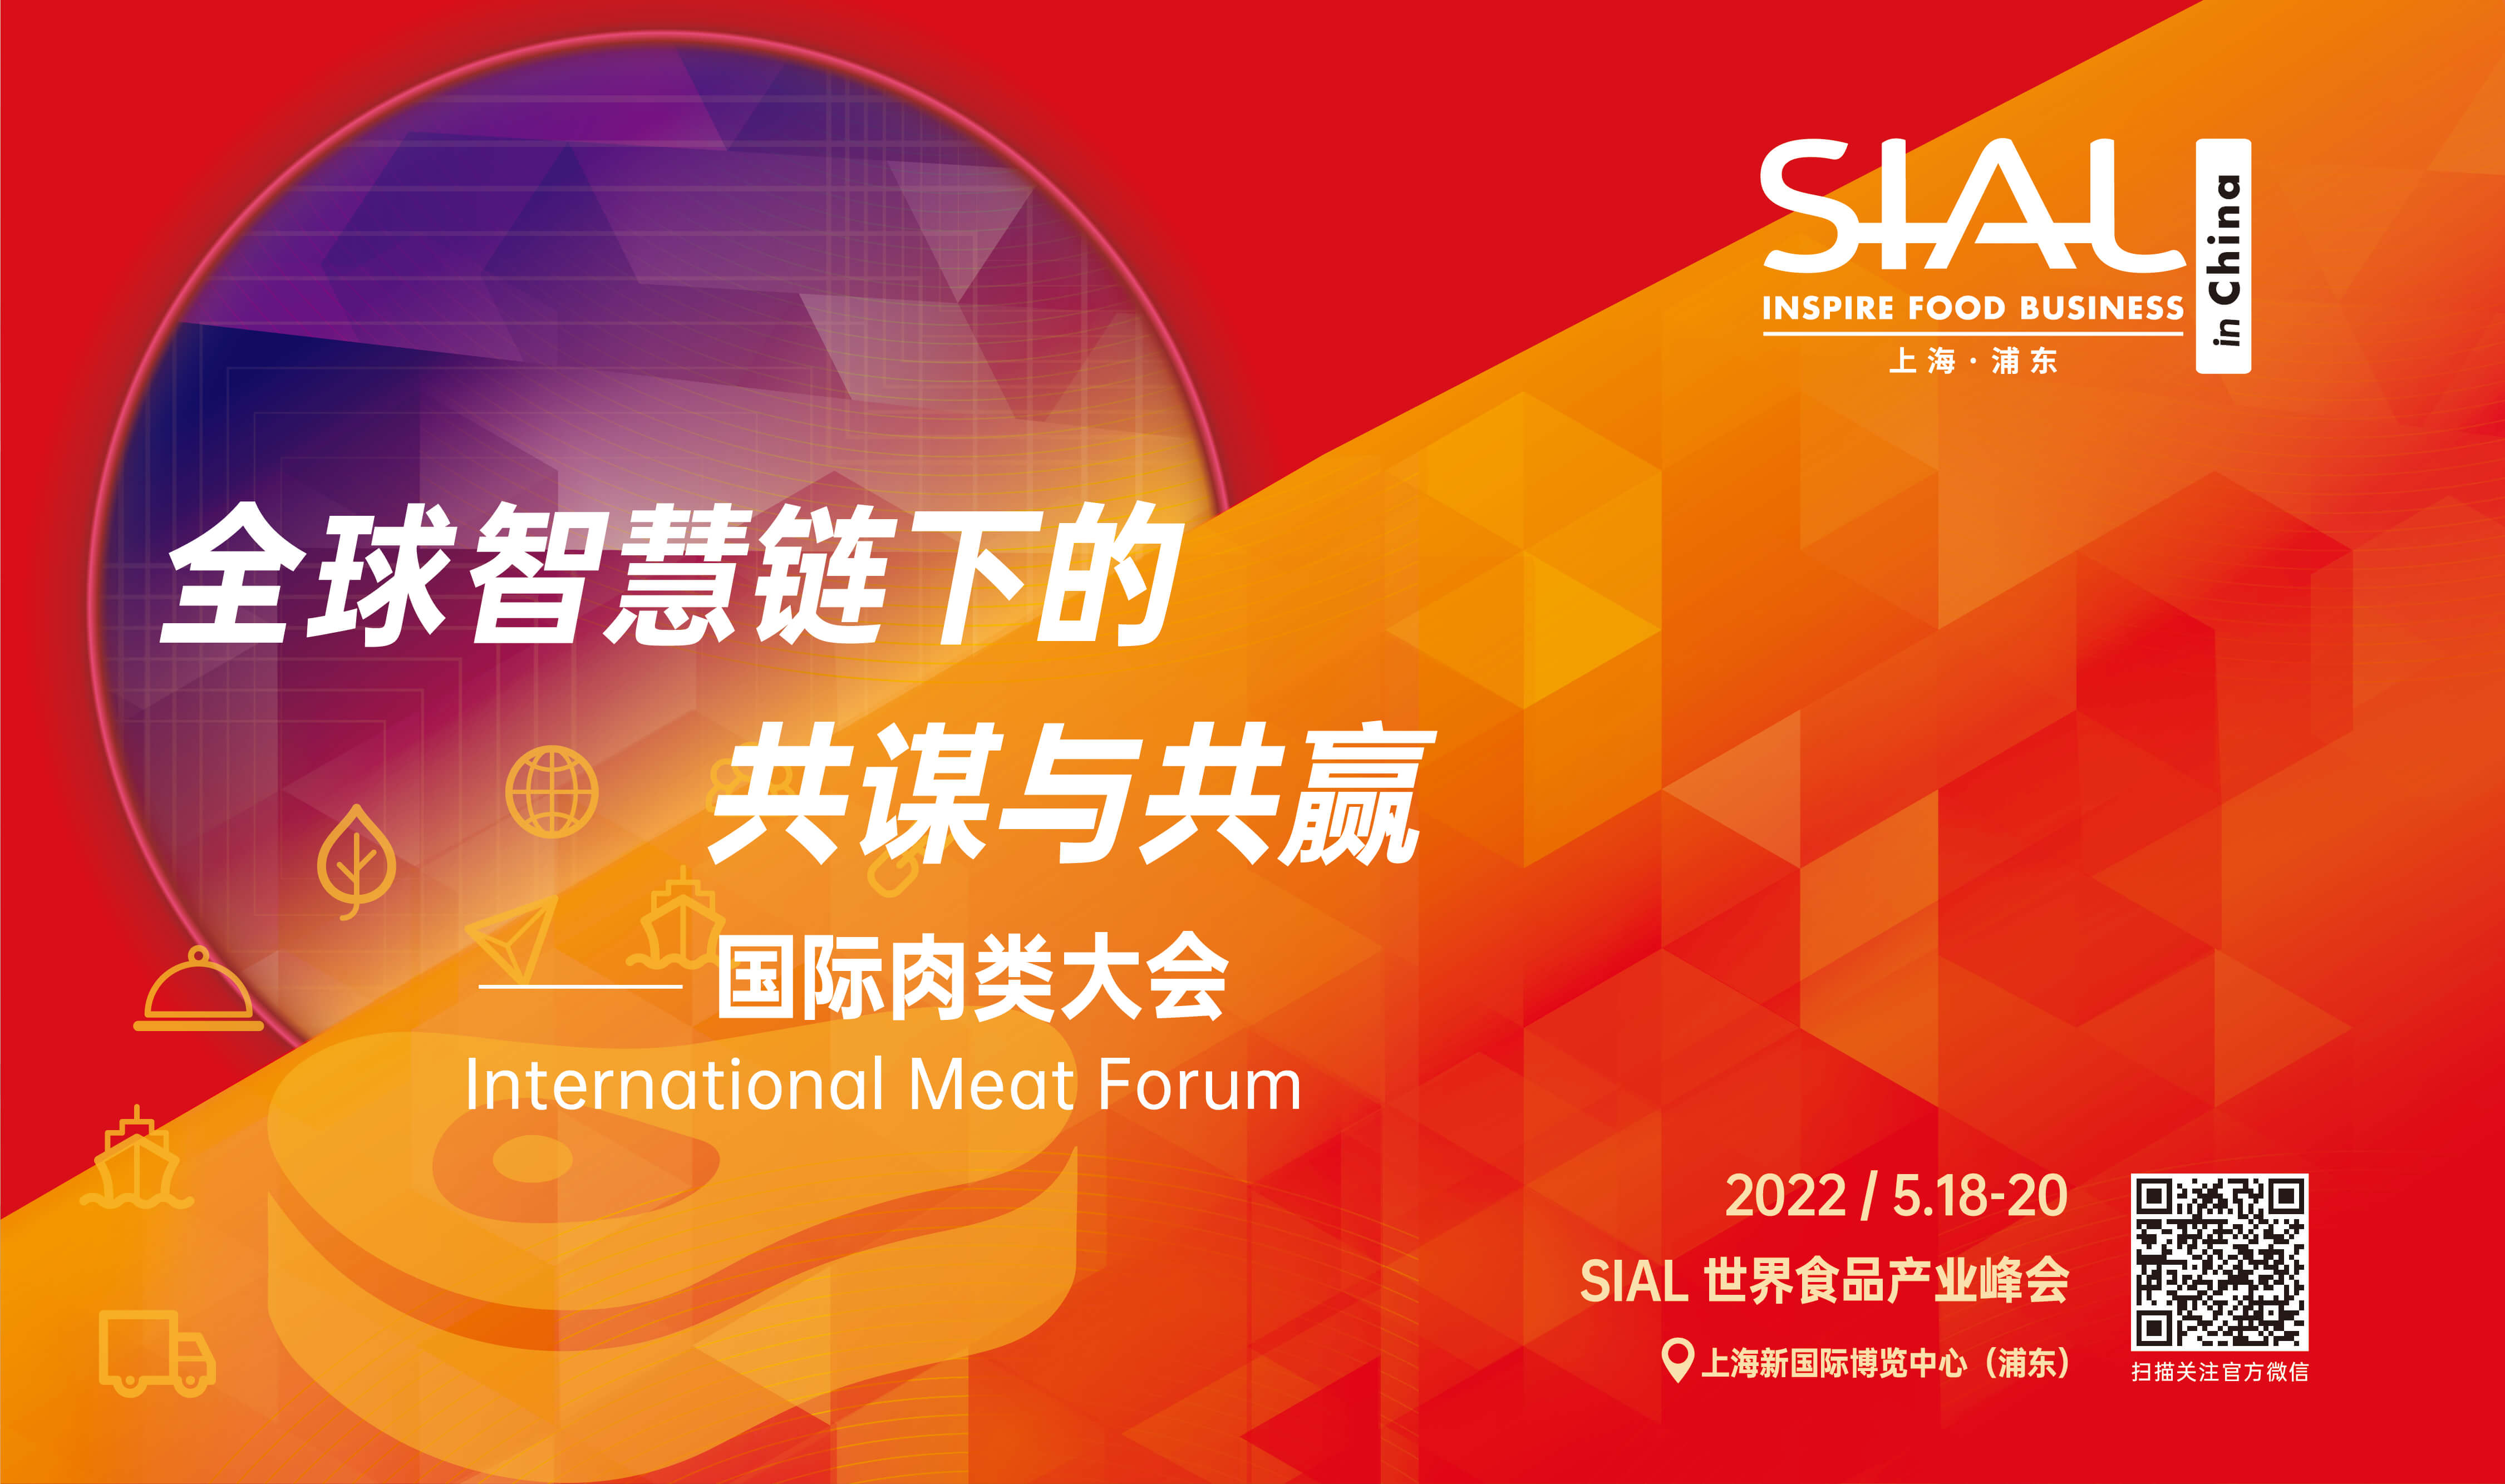 International Meat Forum